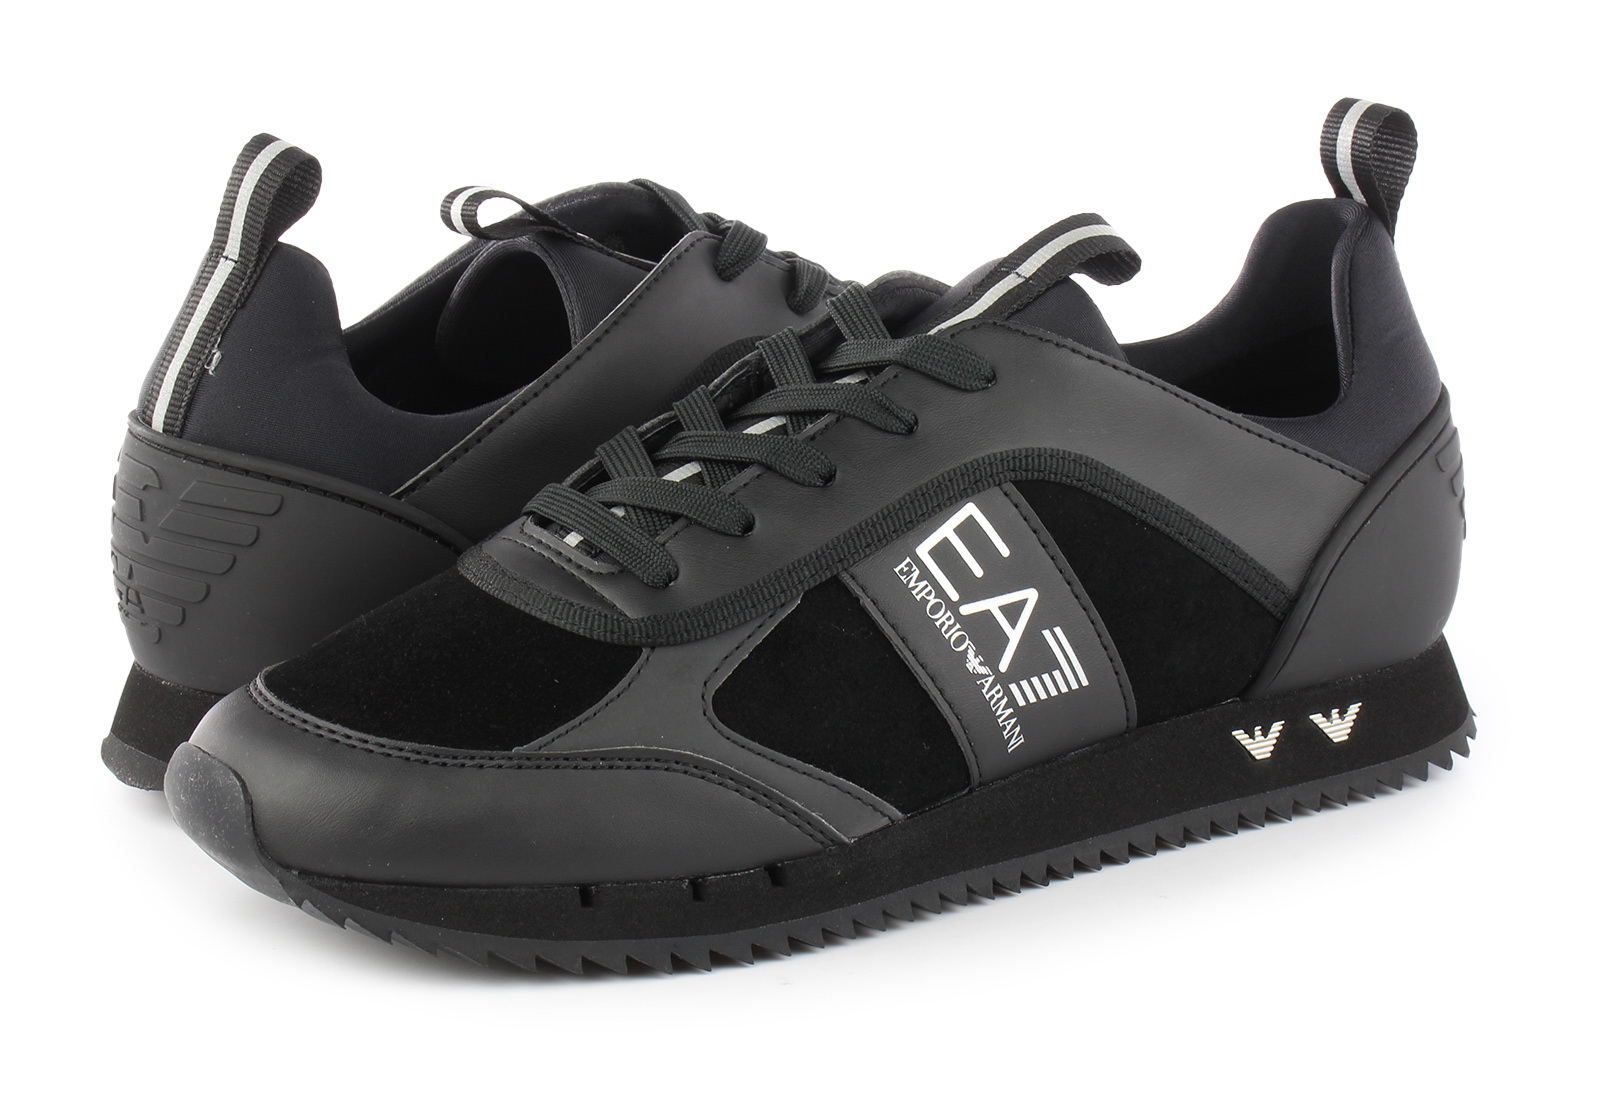 Leven van tofu Inschrijven EA7 Emporio Armani Sneakers - Suede - XK173-X027-BLK - Online shop for  sneakers, shoes and boots